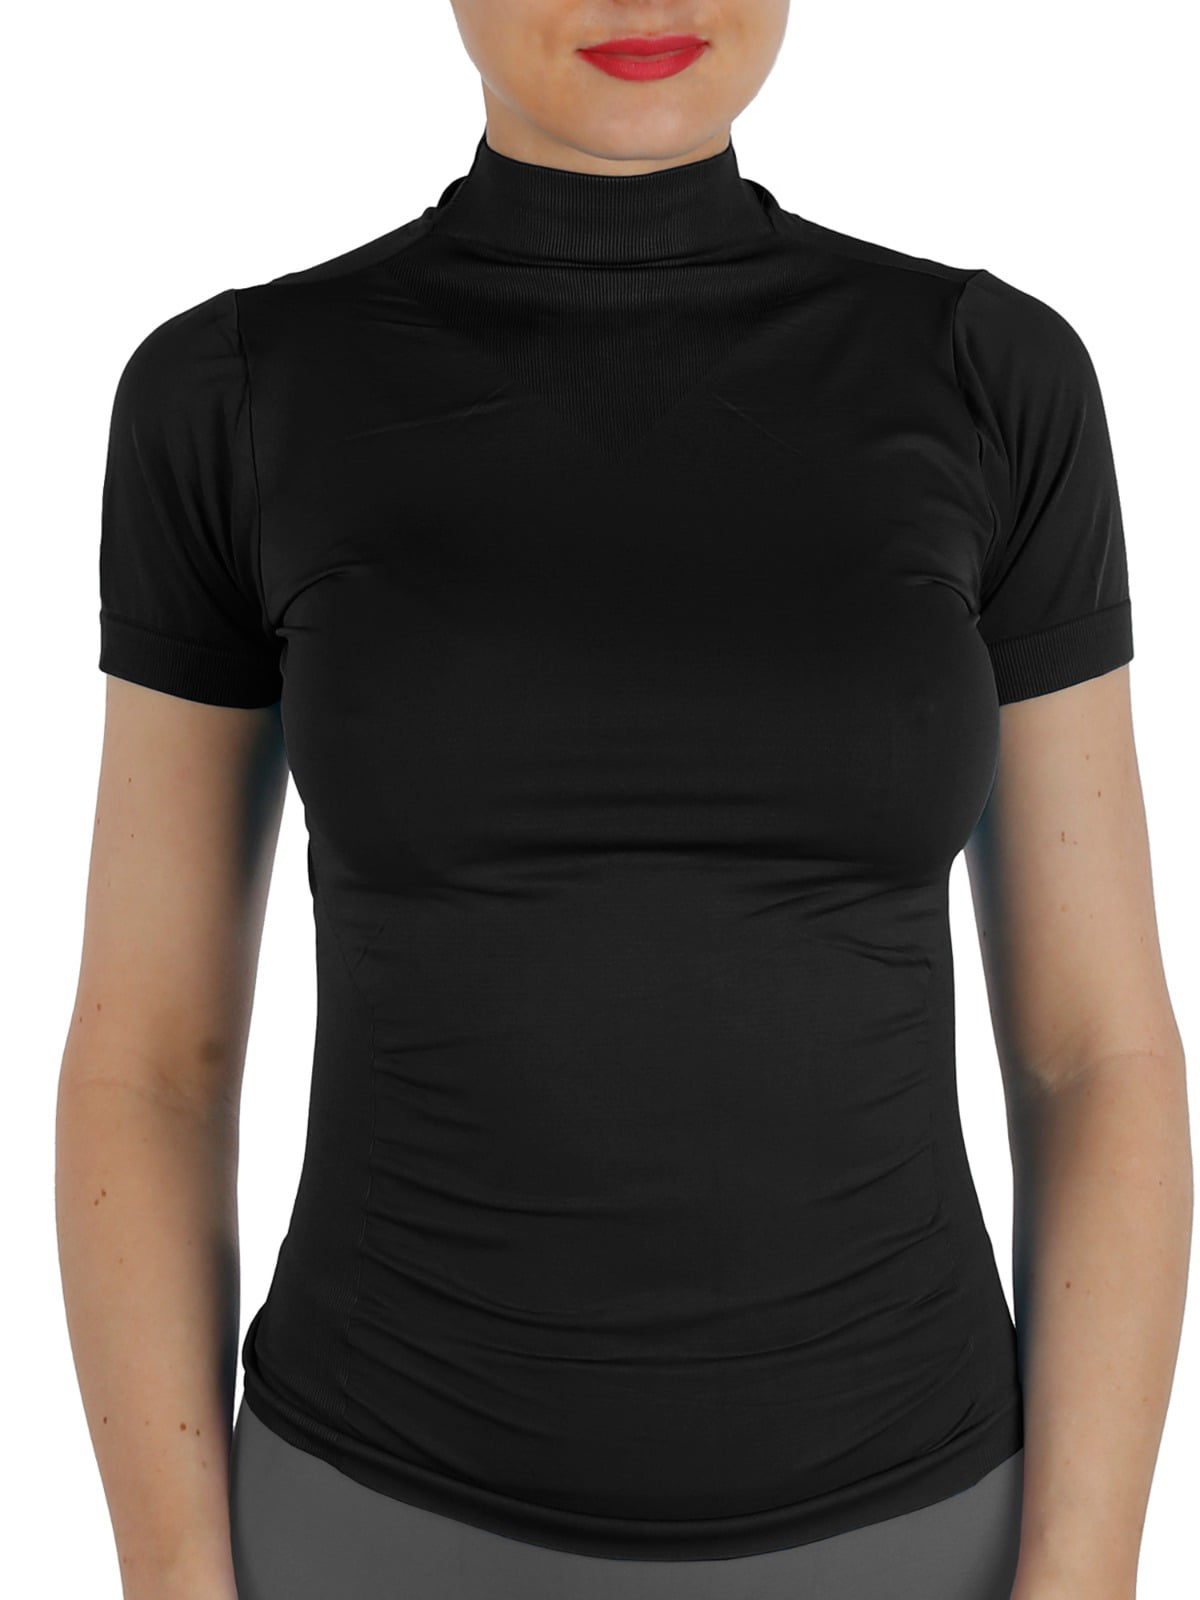 Download KS-AllyCat - AllyCat Women Short Sleeves Mock Neck ...